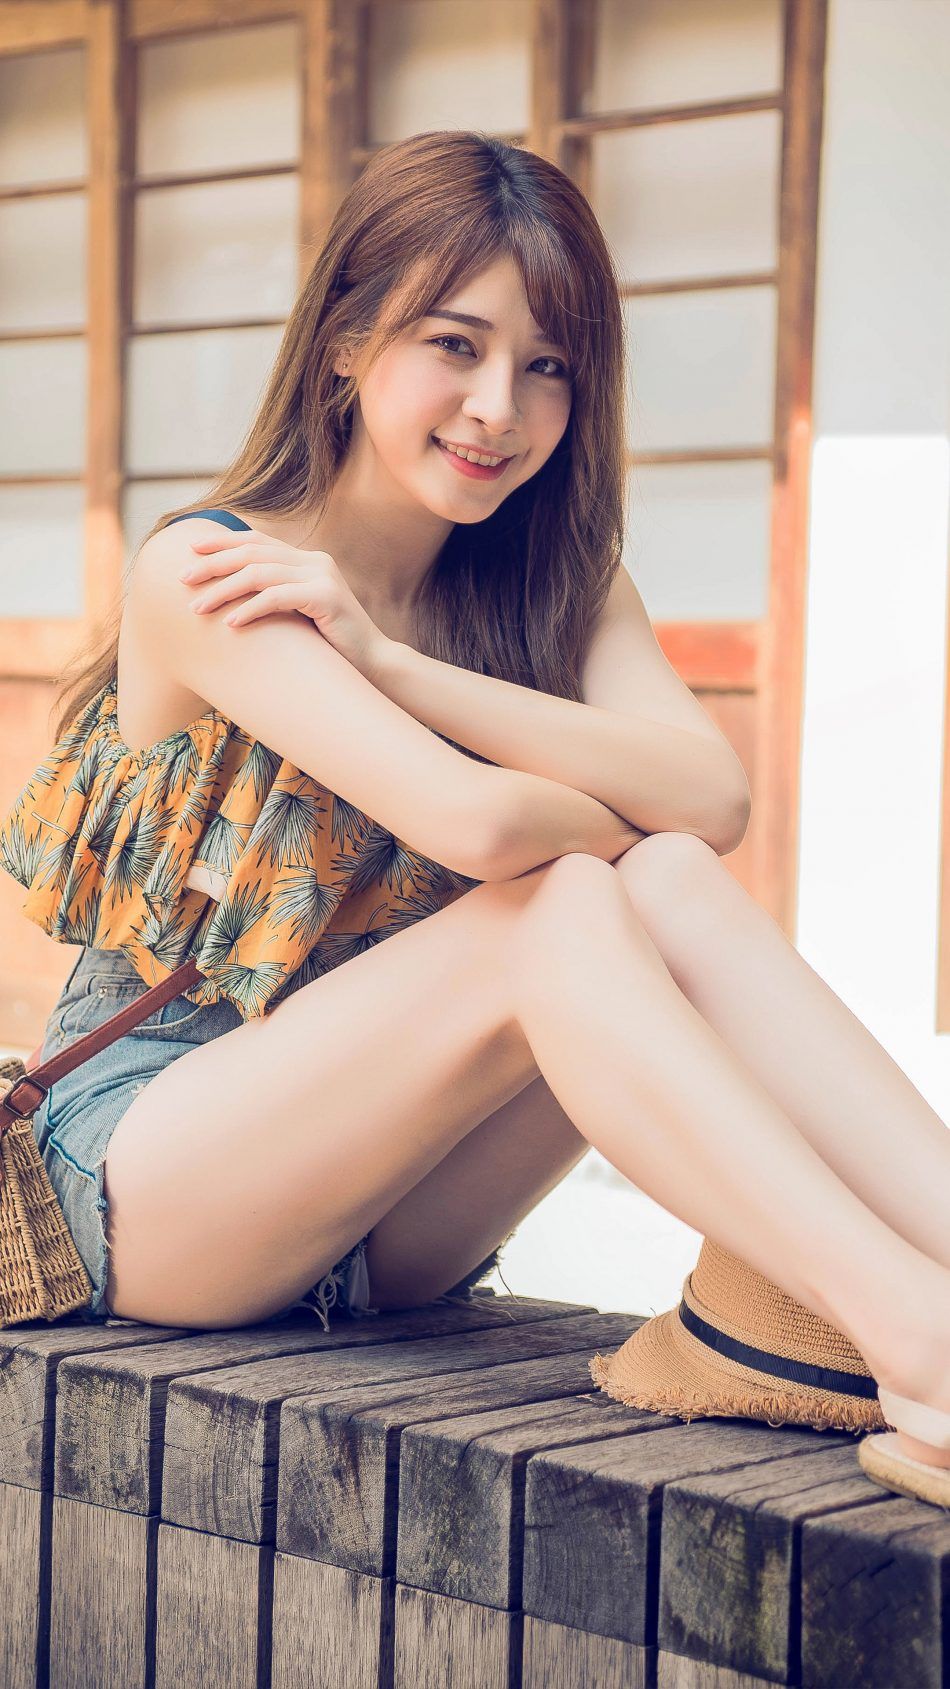 Beautiful Asian Girl Smile Happy Free 4K Ultra HD Mobile Wallpaper